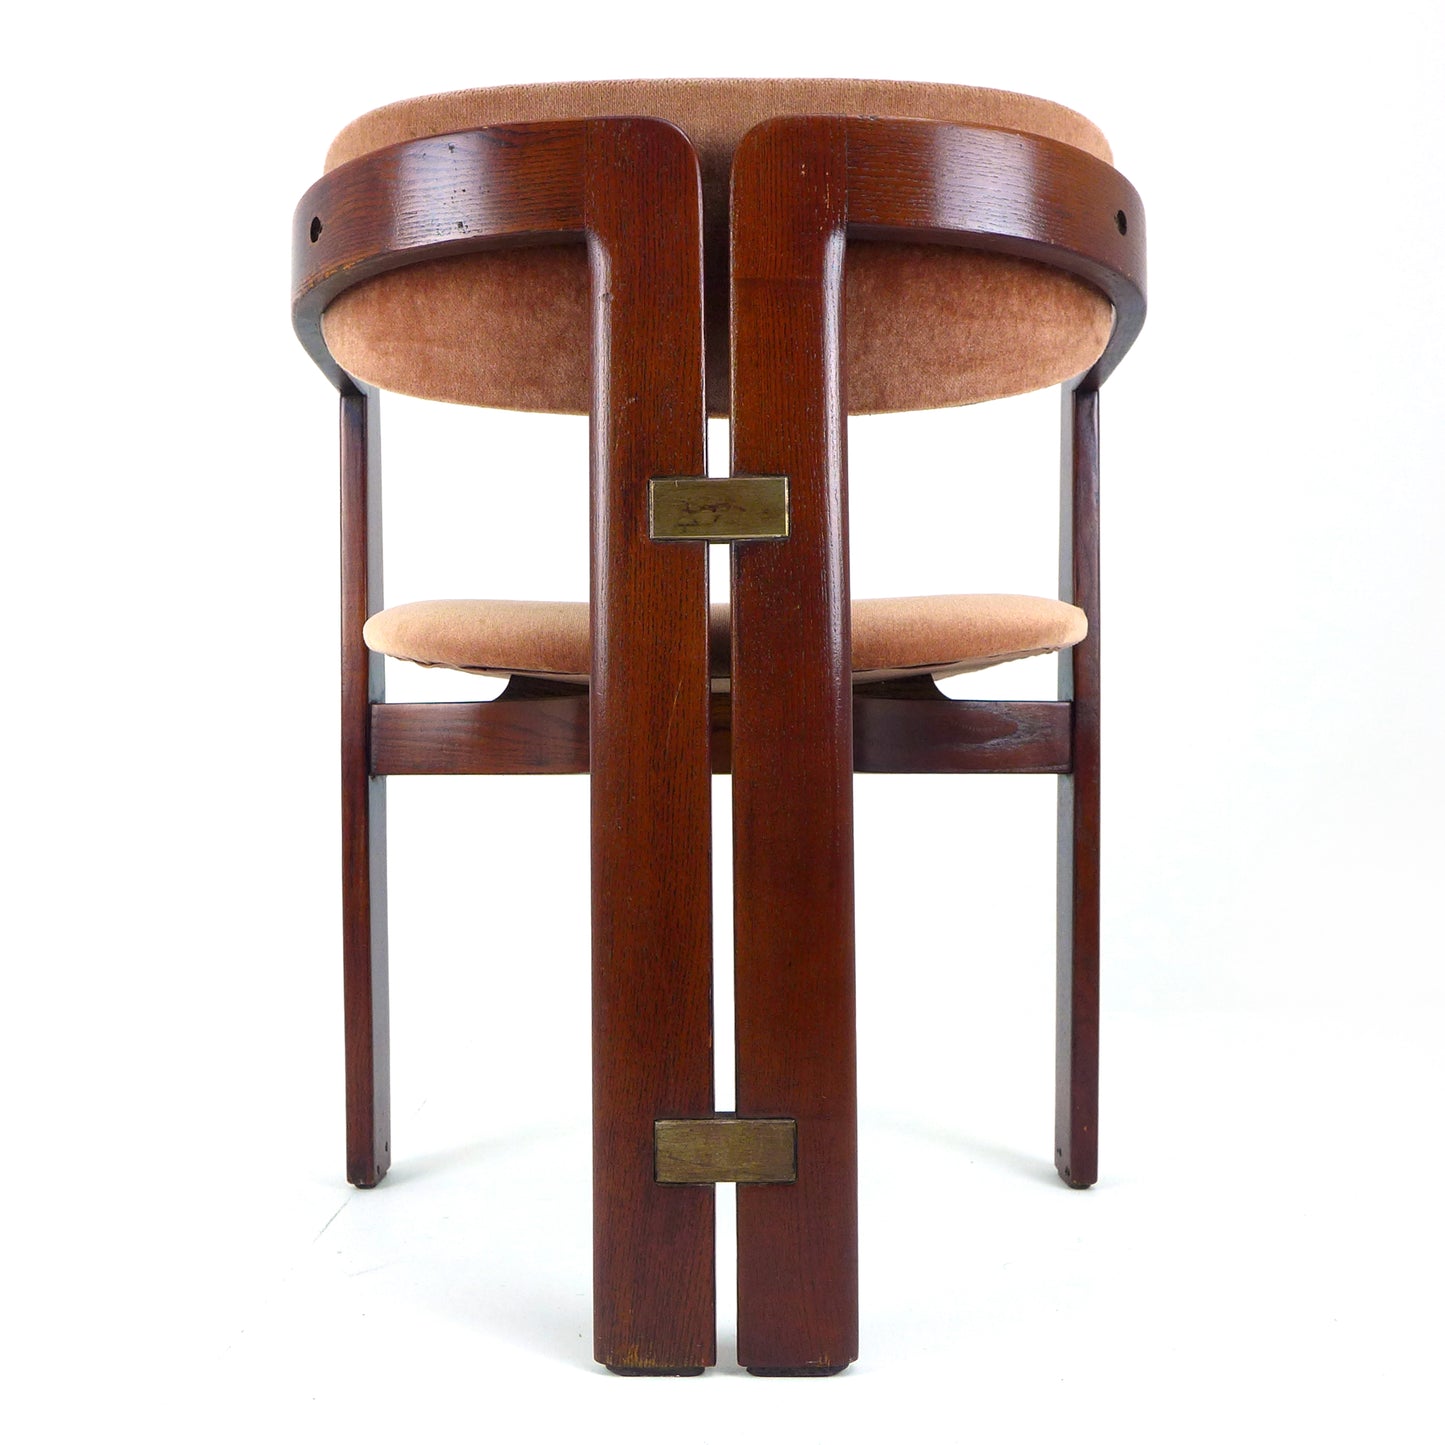 Tobia Scarpa "Pigreco" Chair circa 1956 for Gavina - Italian Mid Century Classic